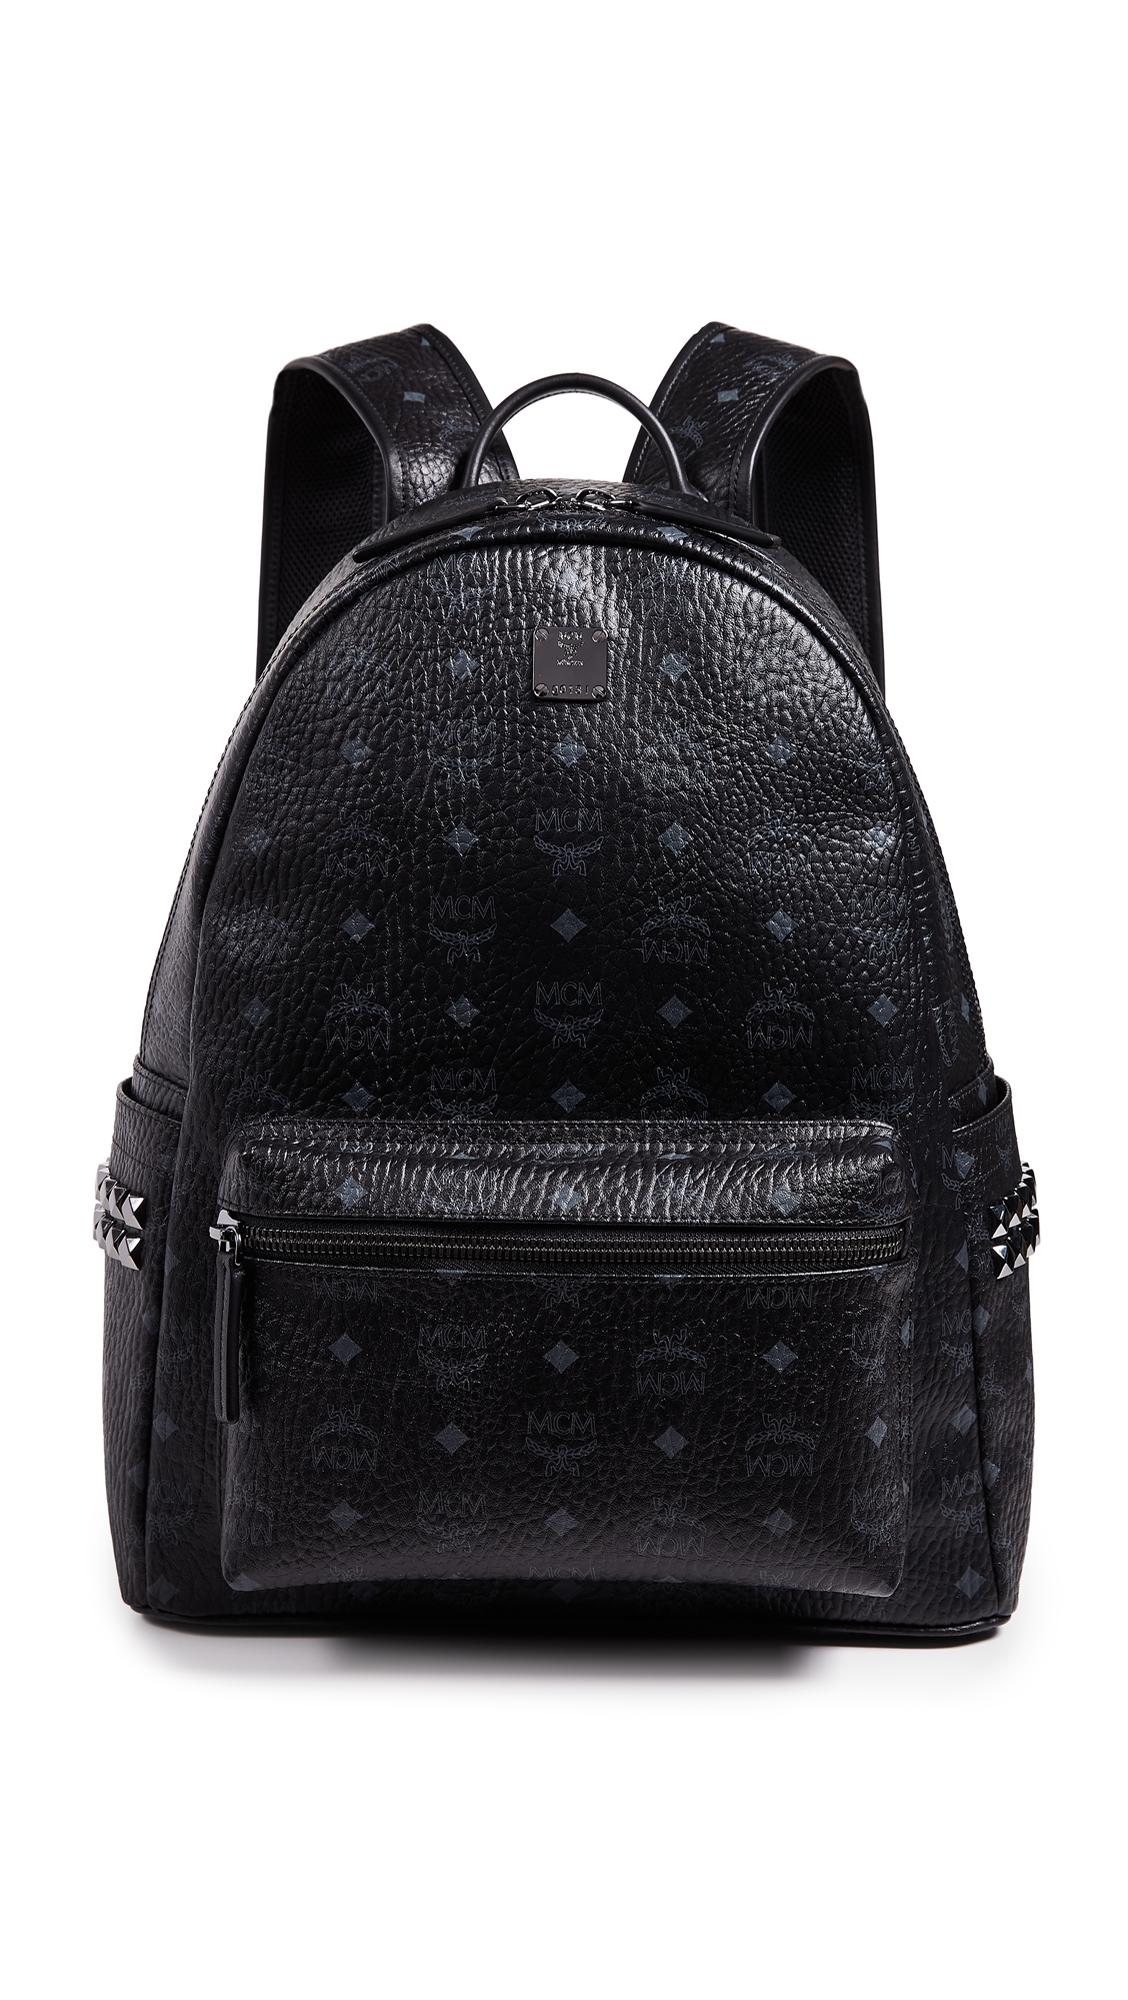 MCM Stark Medium Side Stud Backpack in Black for Men - Lyst